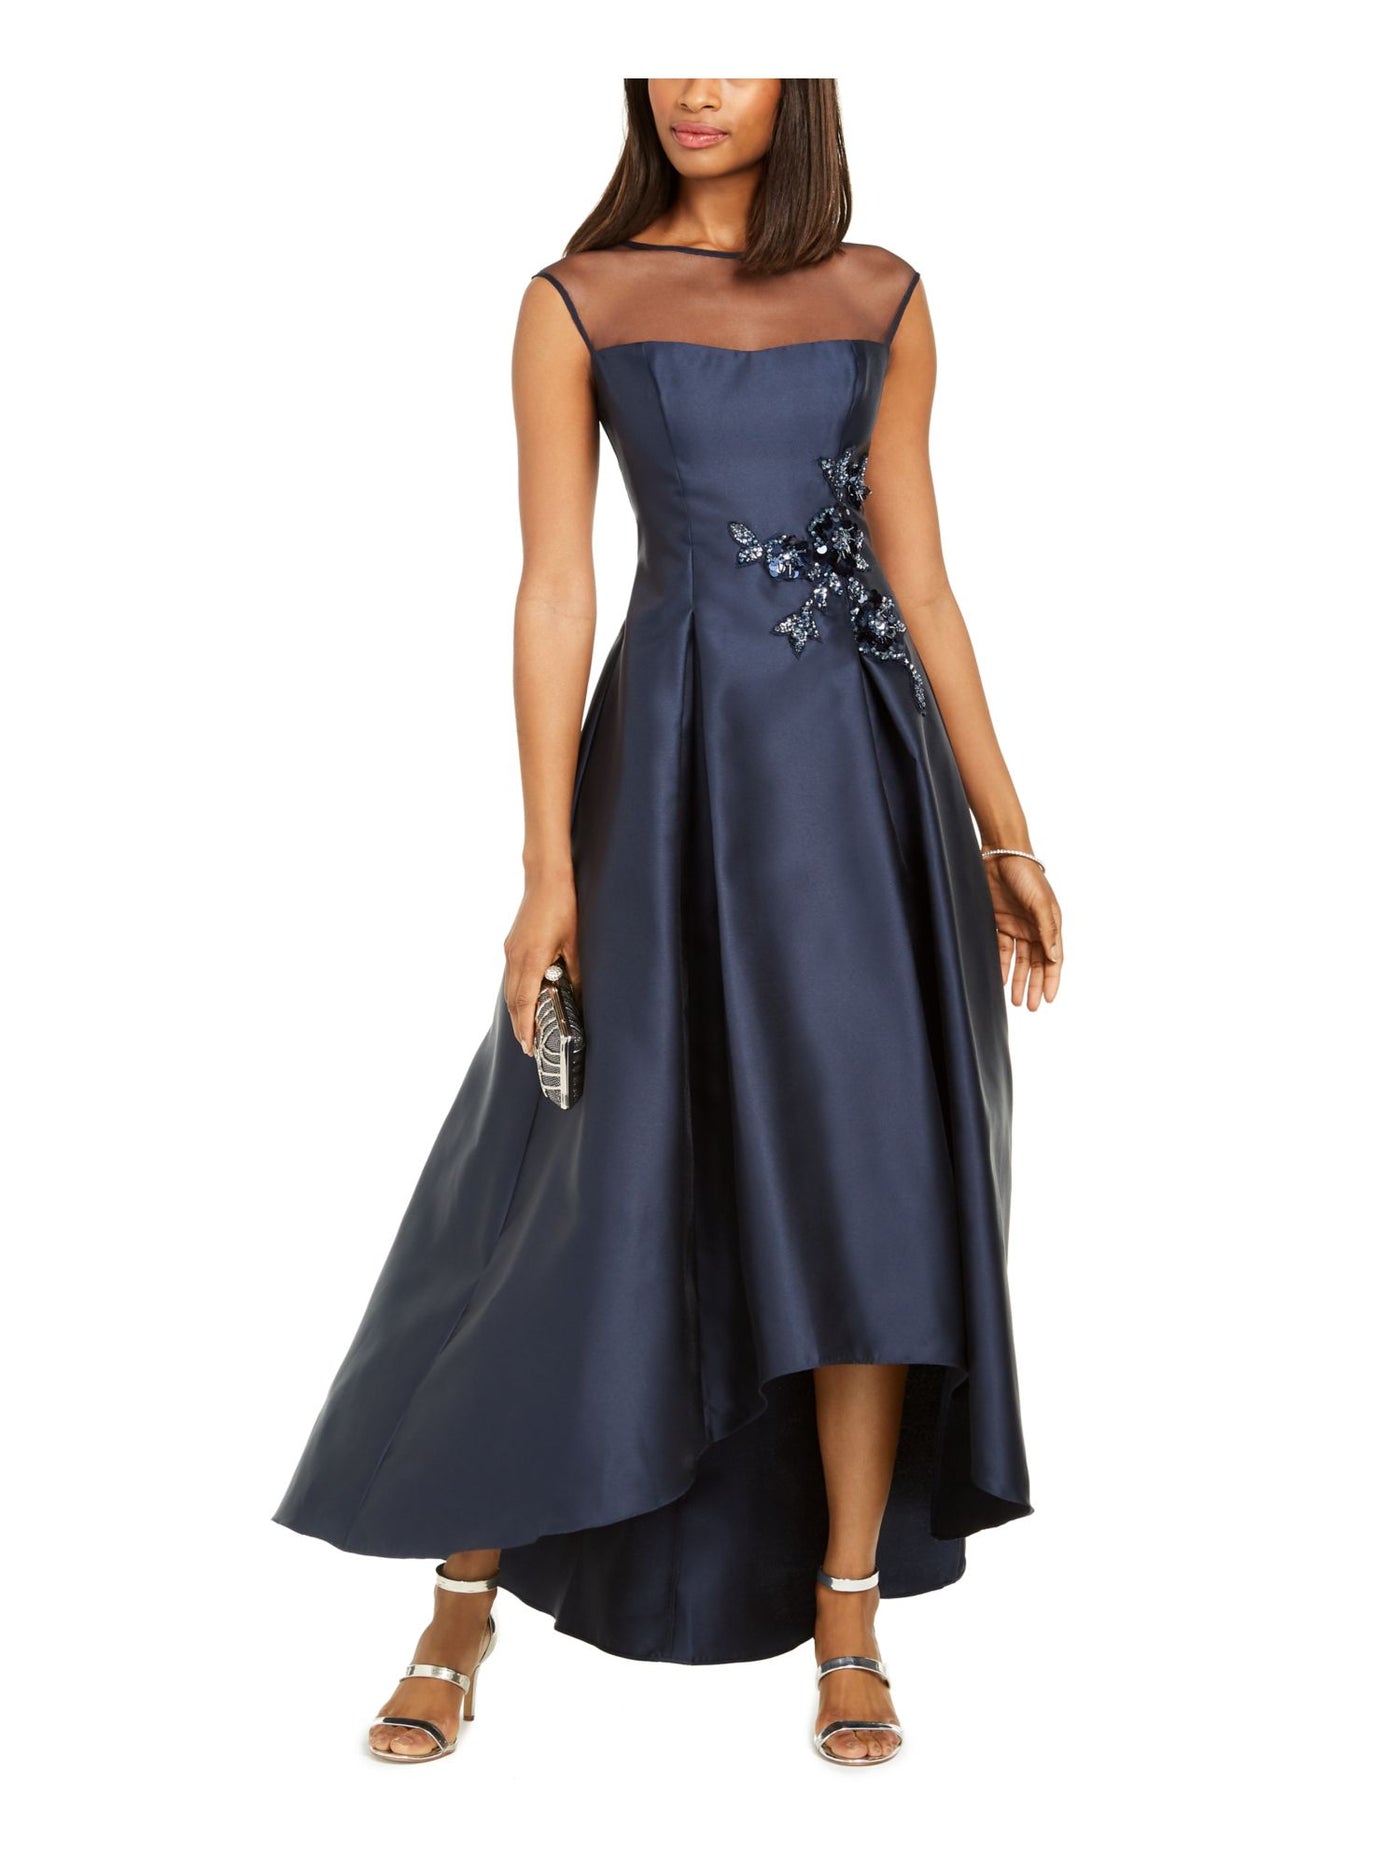 ADRIANNA PAPELL Womens Navy Embellished Sleeveless Illusion Neckline Evening Hi-Lo Dress 10